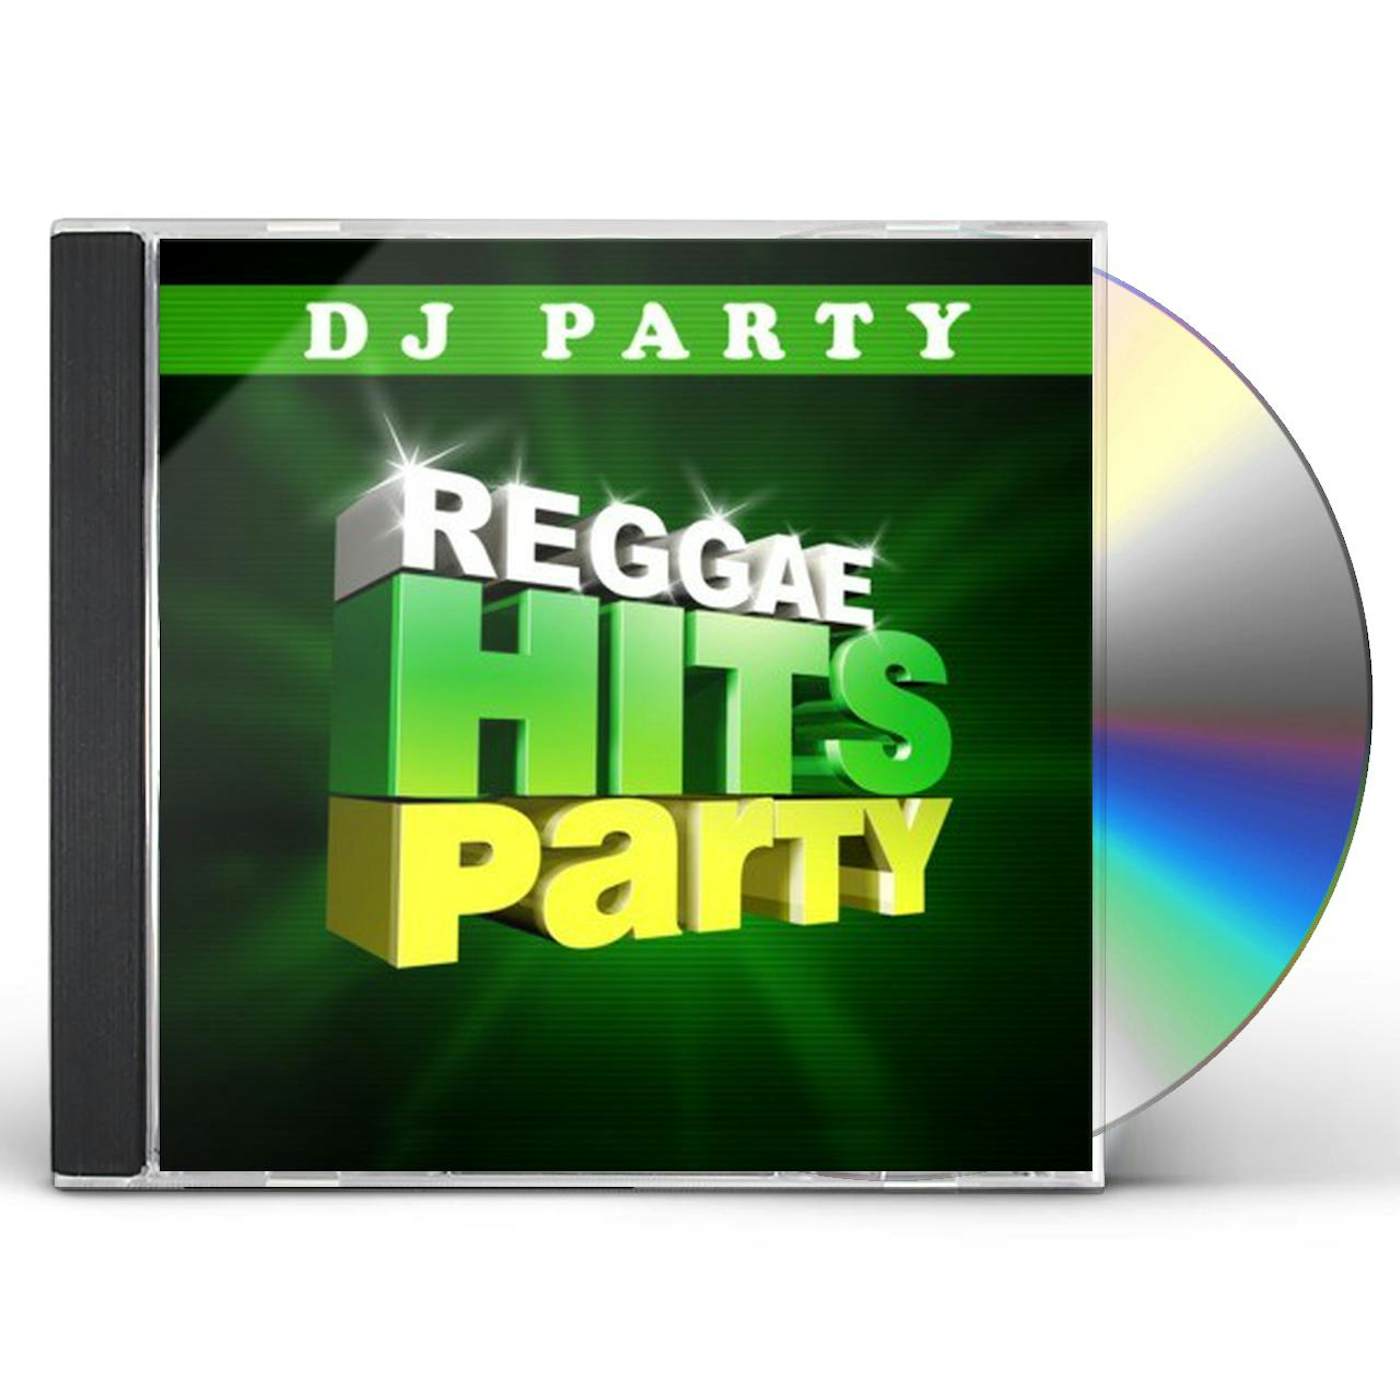 DJ Party REGGAE HITS PARTY VOL. 1 CD